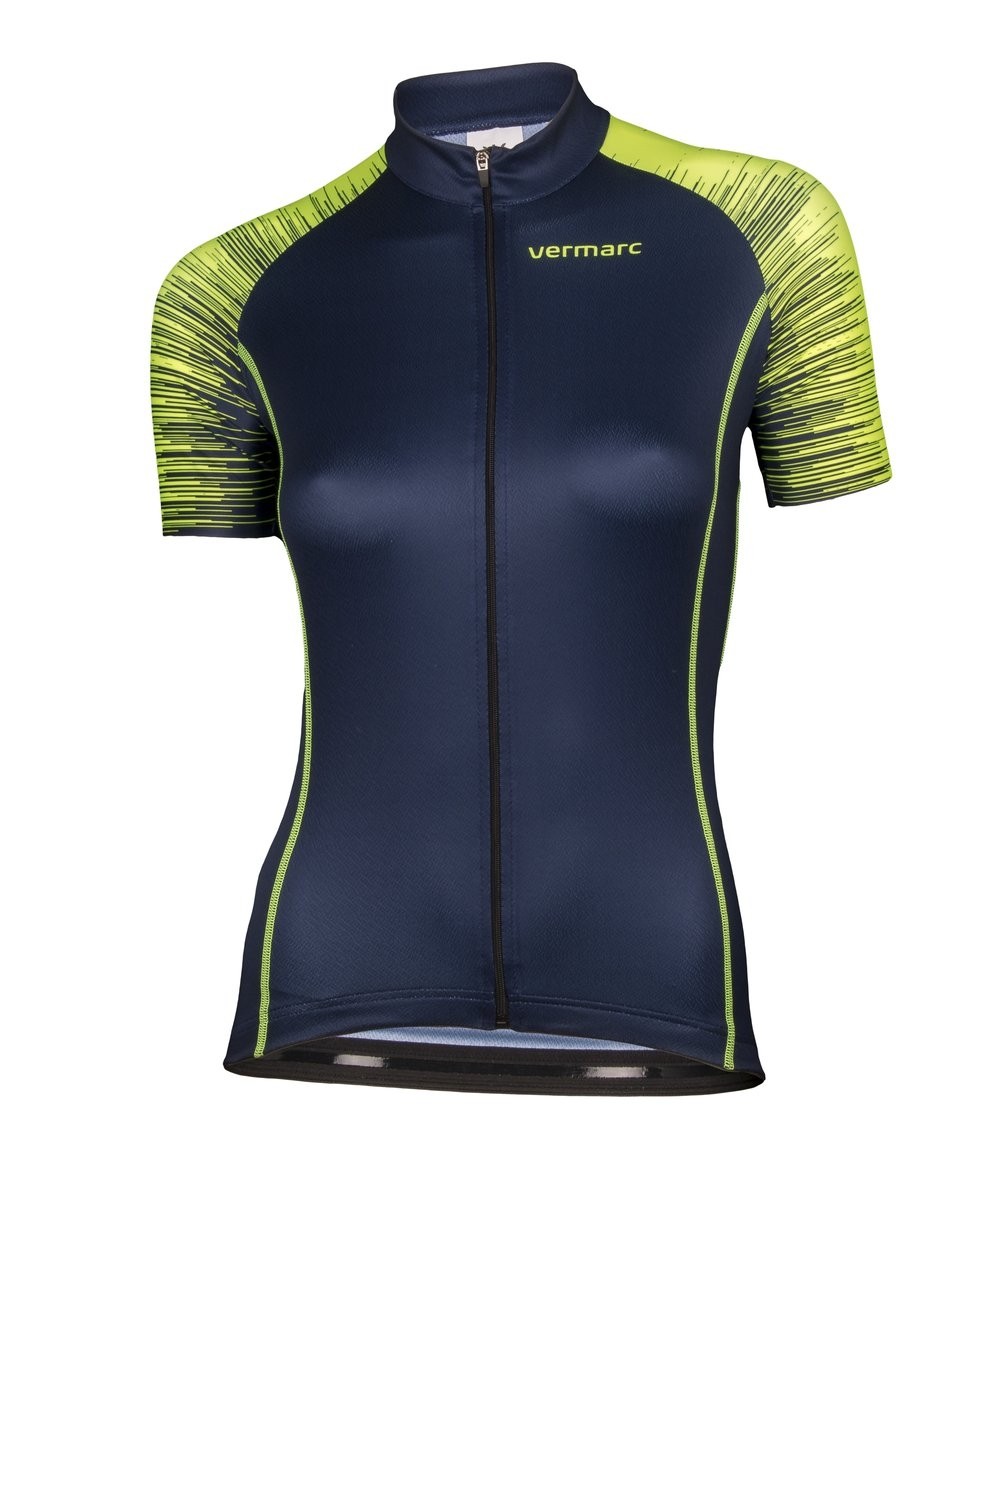 Vermarc seiso sp.l aero maillot de cyclisme manches courtes femme navy bleu fluo jaune